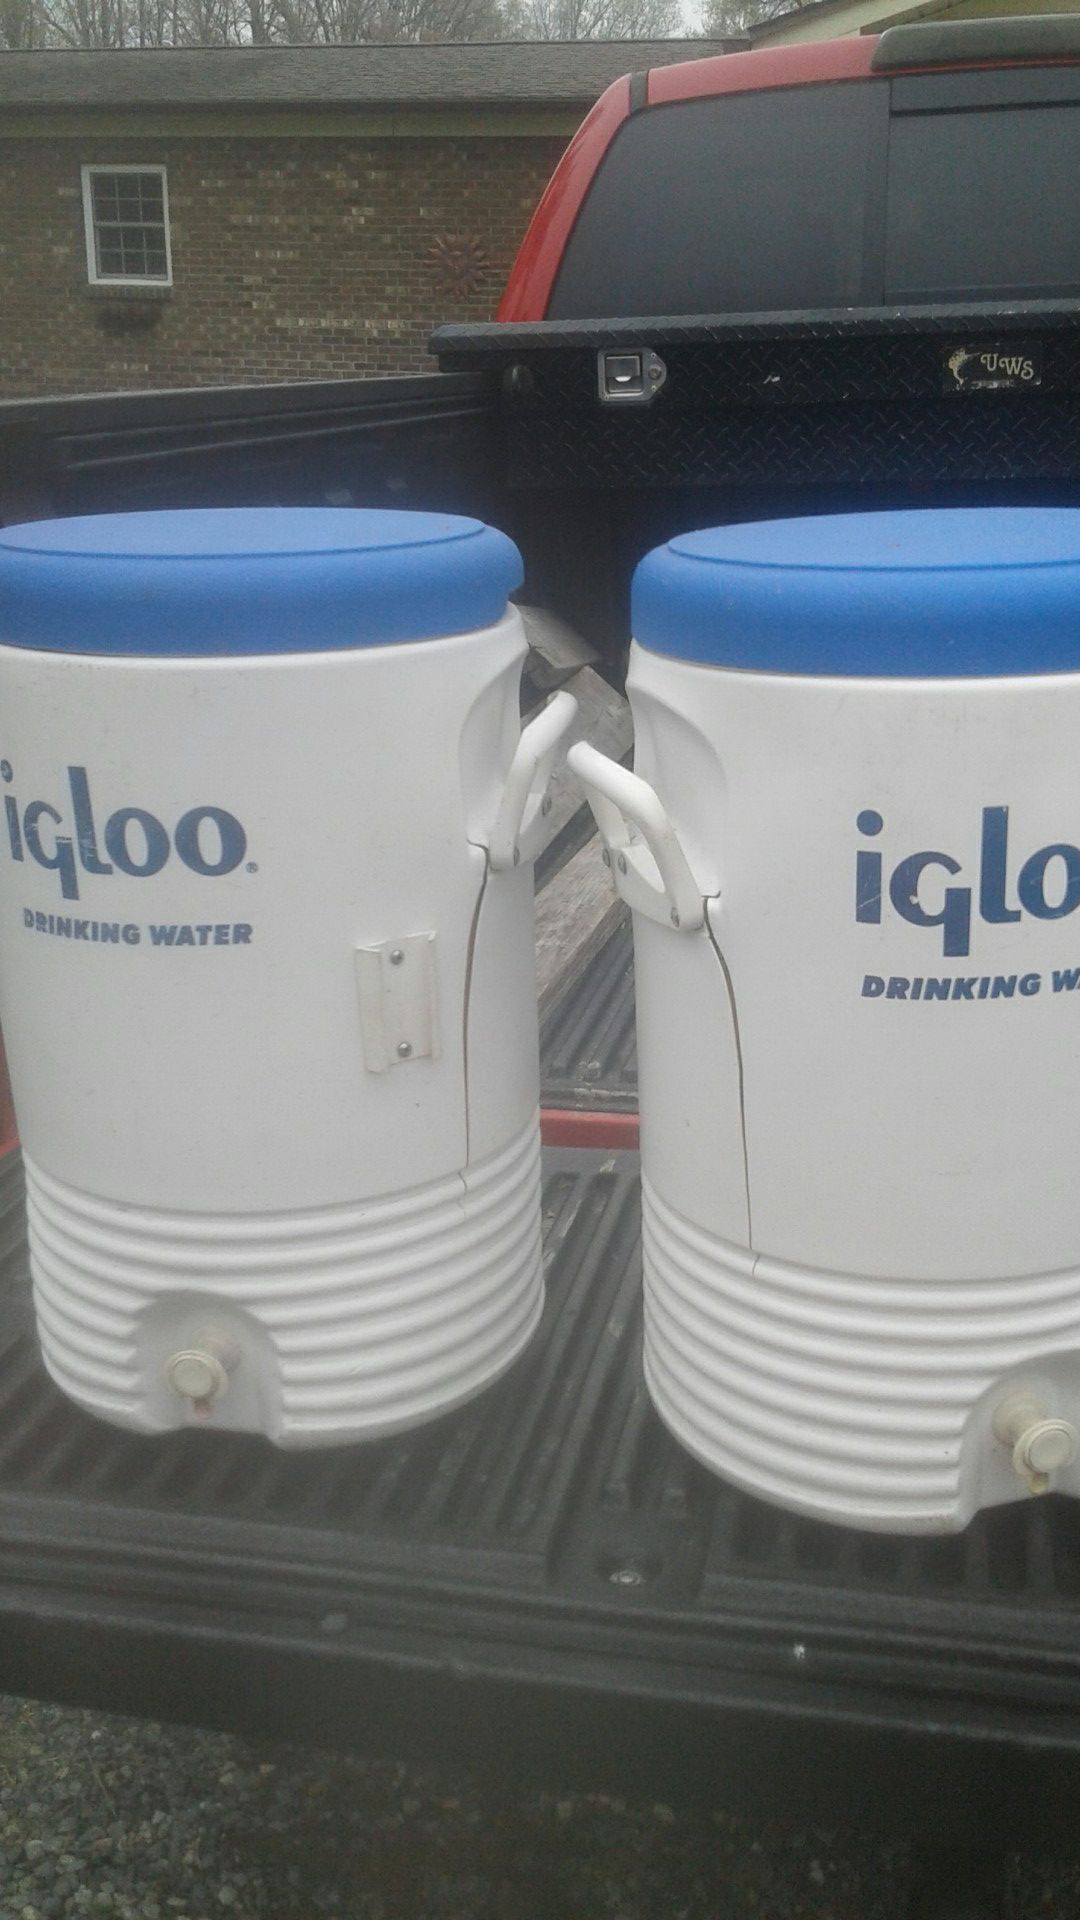 igloo coolers